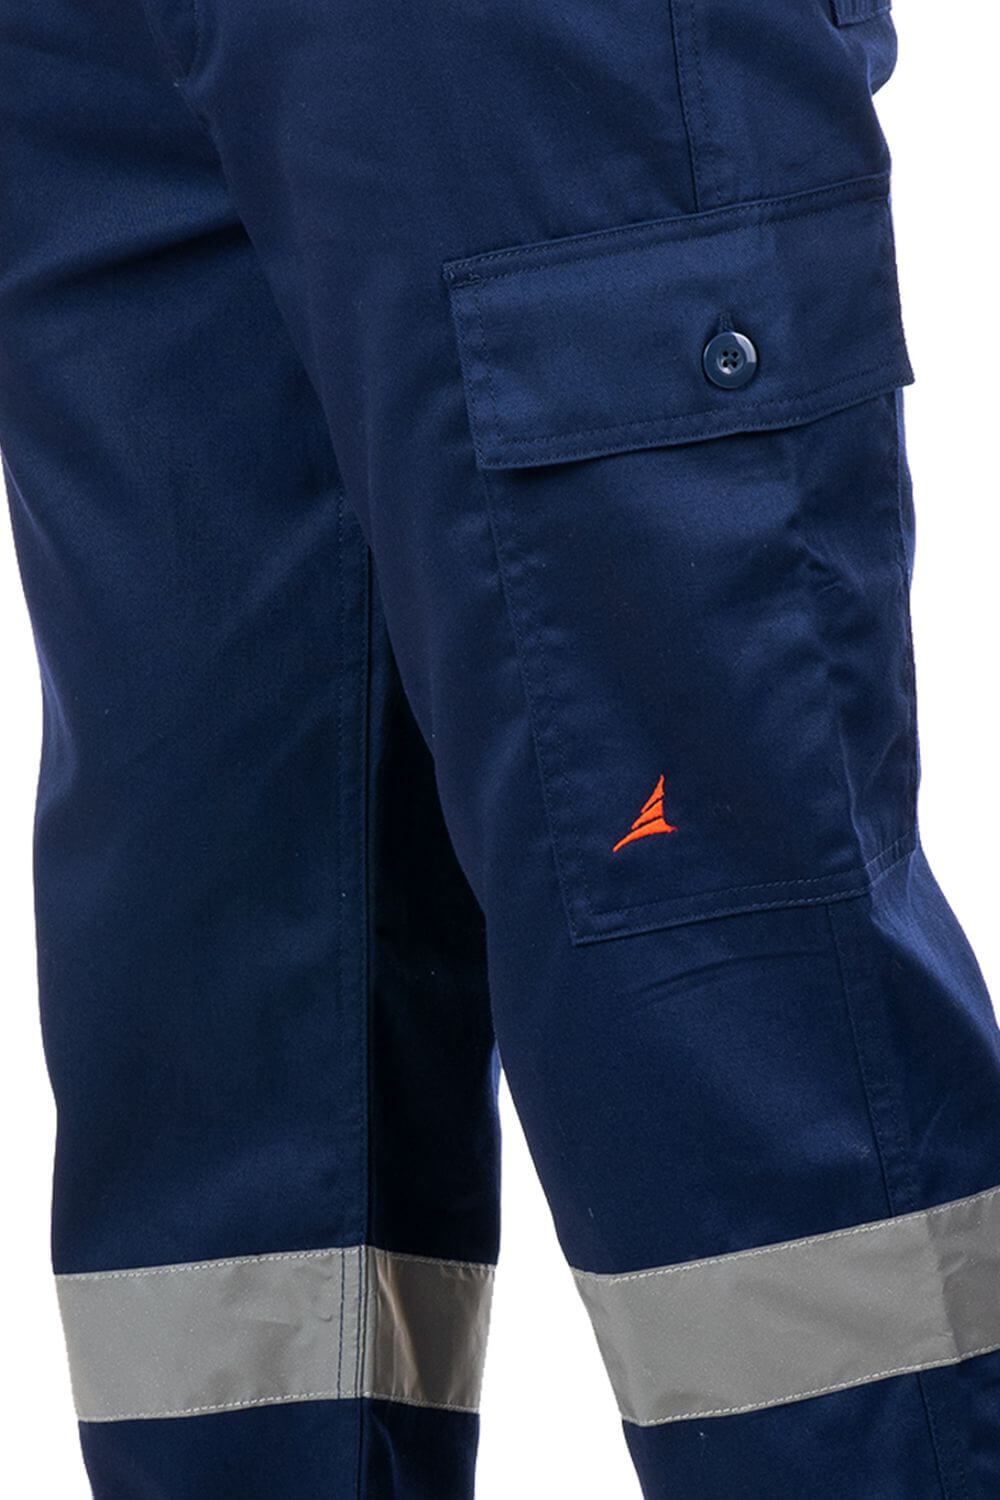 Apache Stretch Work Trousers Cargo Pockets Black Slim Fit Trade Spec  Workwear | eBay